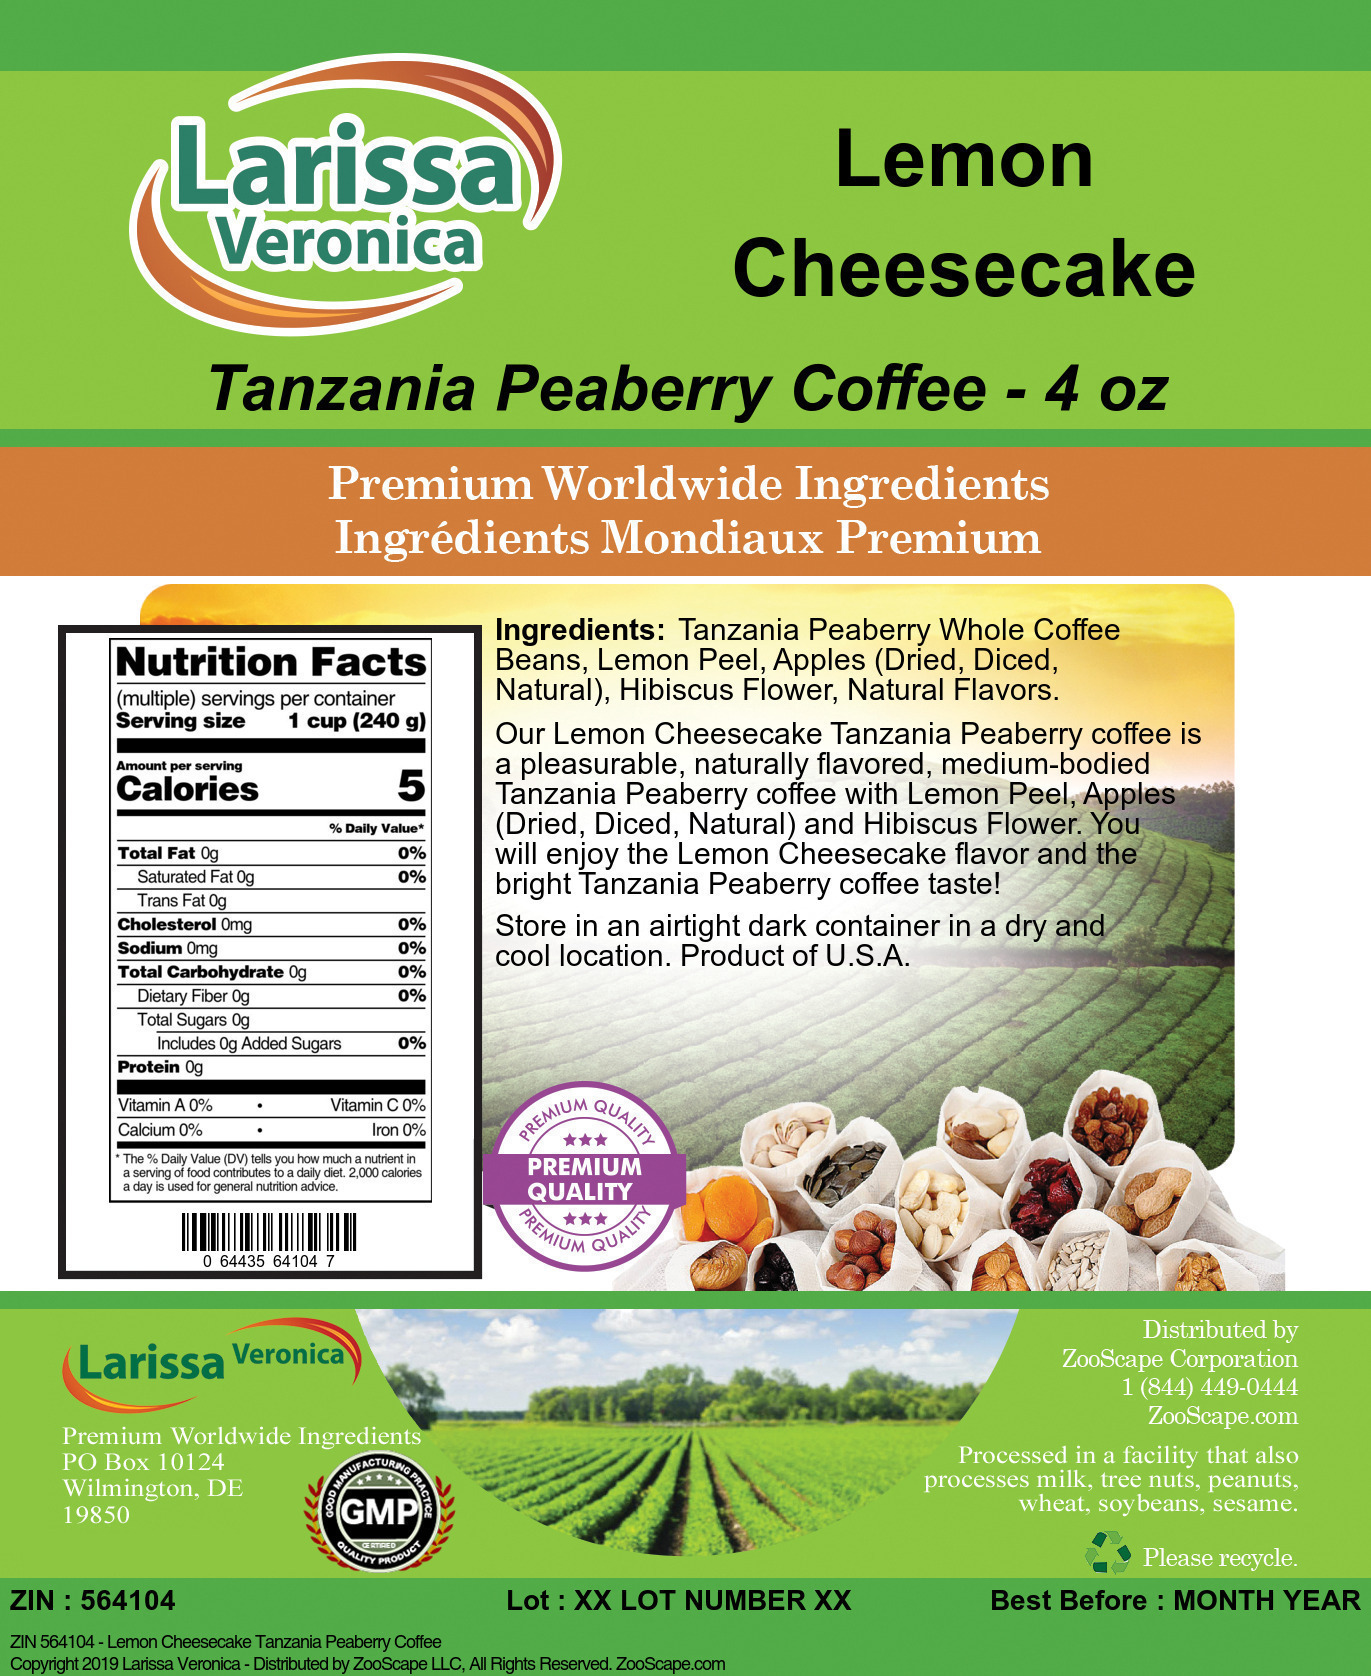 Lemon Cheesecake Tanzania Peaberry Coffee - Label